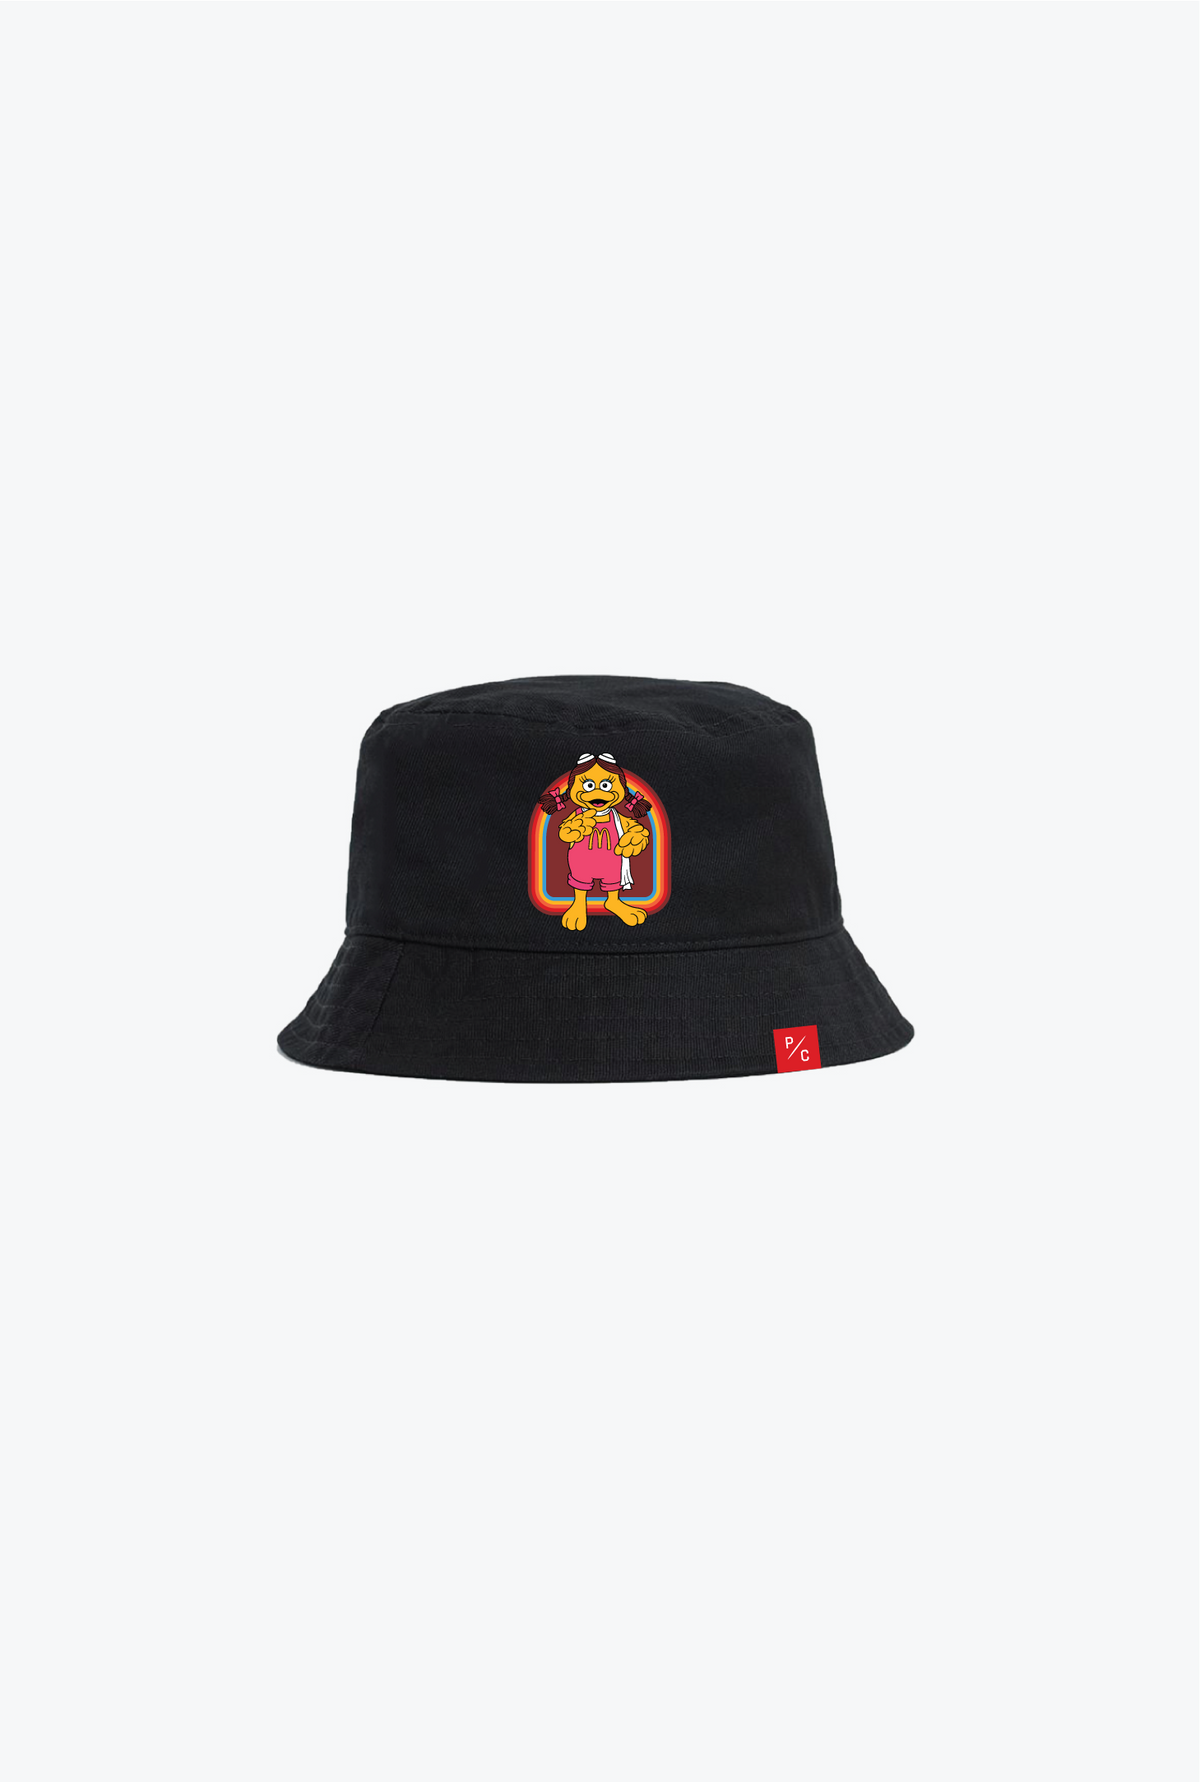 P/C x McDonald's Birdie Retro Bucket Hat - Black